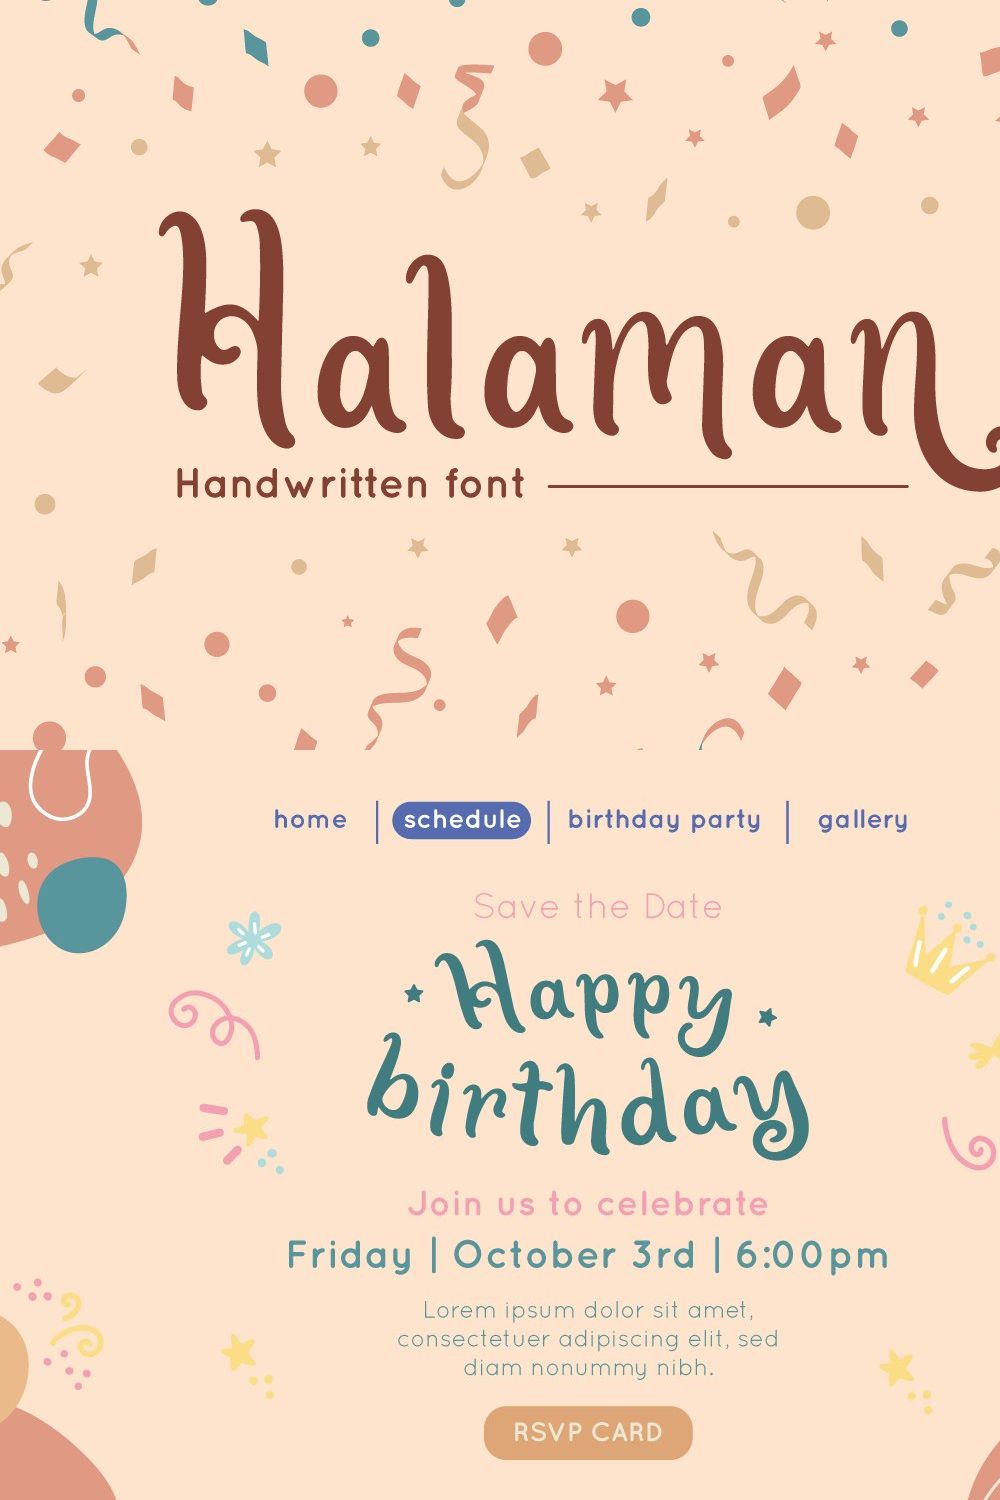 Halaman - Handwritten Font pinterest preview image.